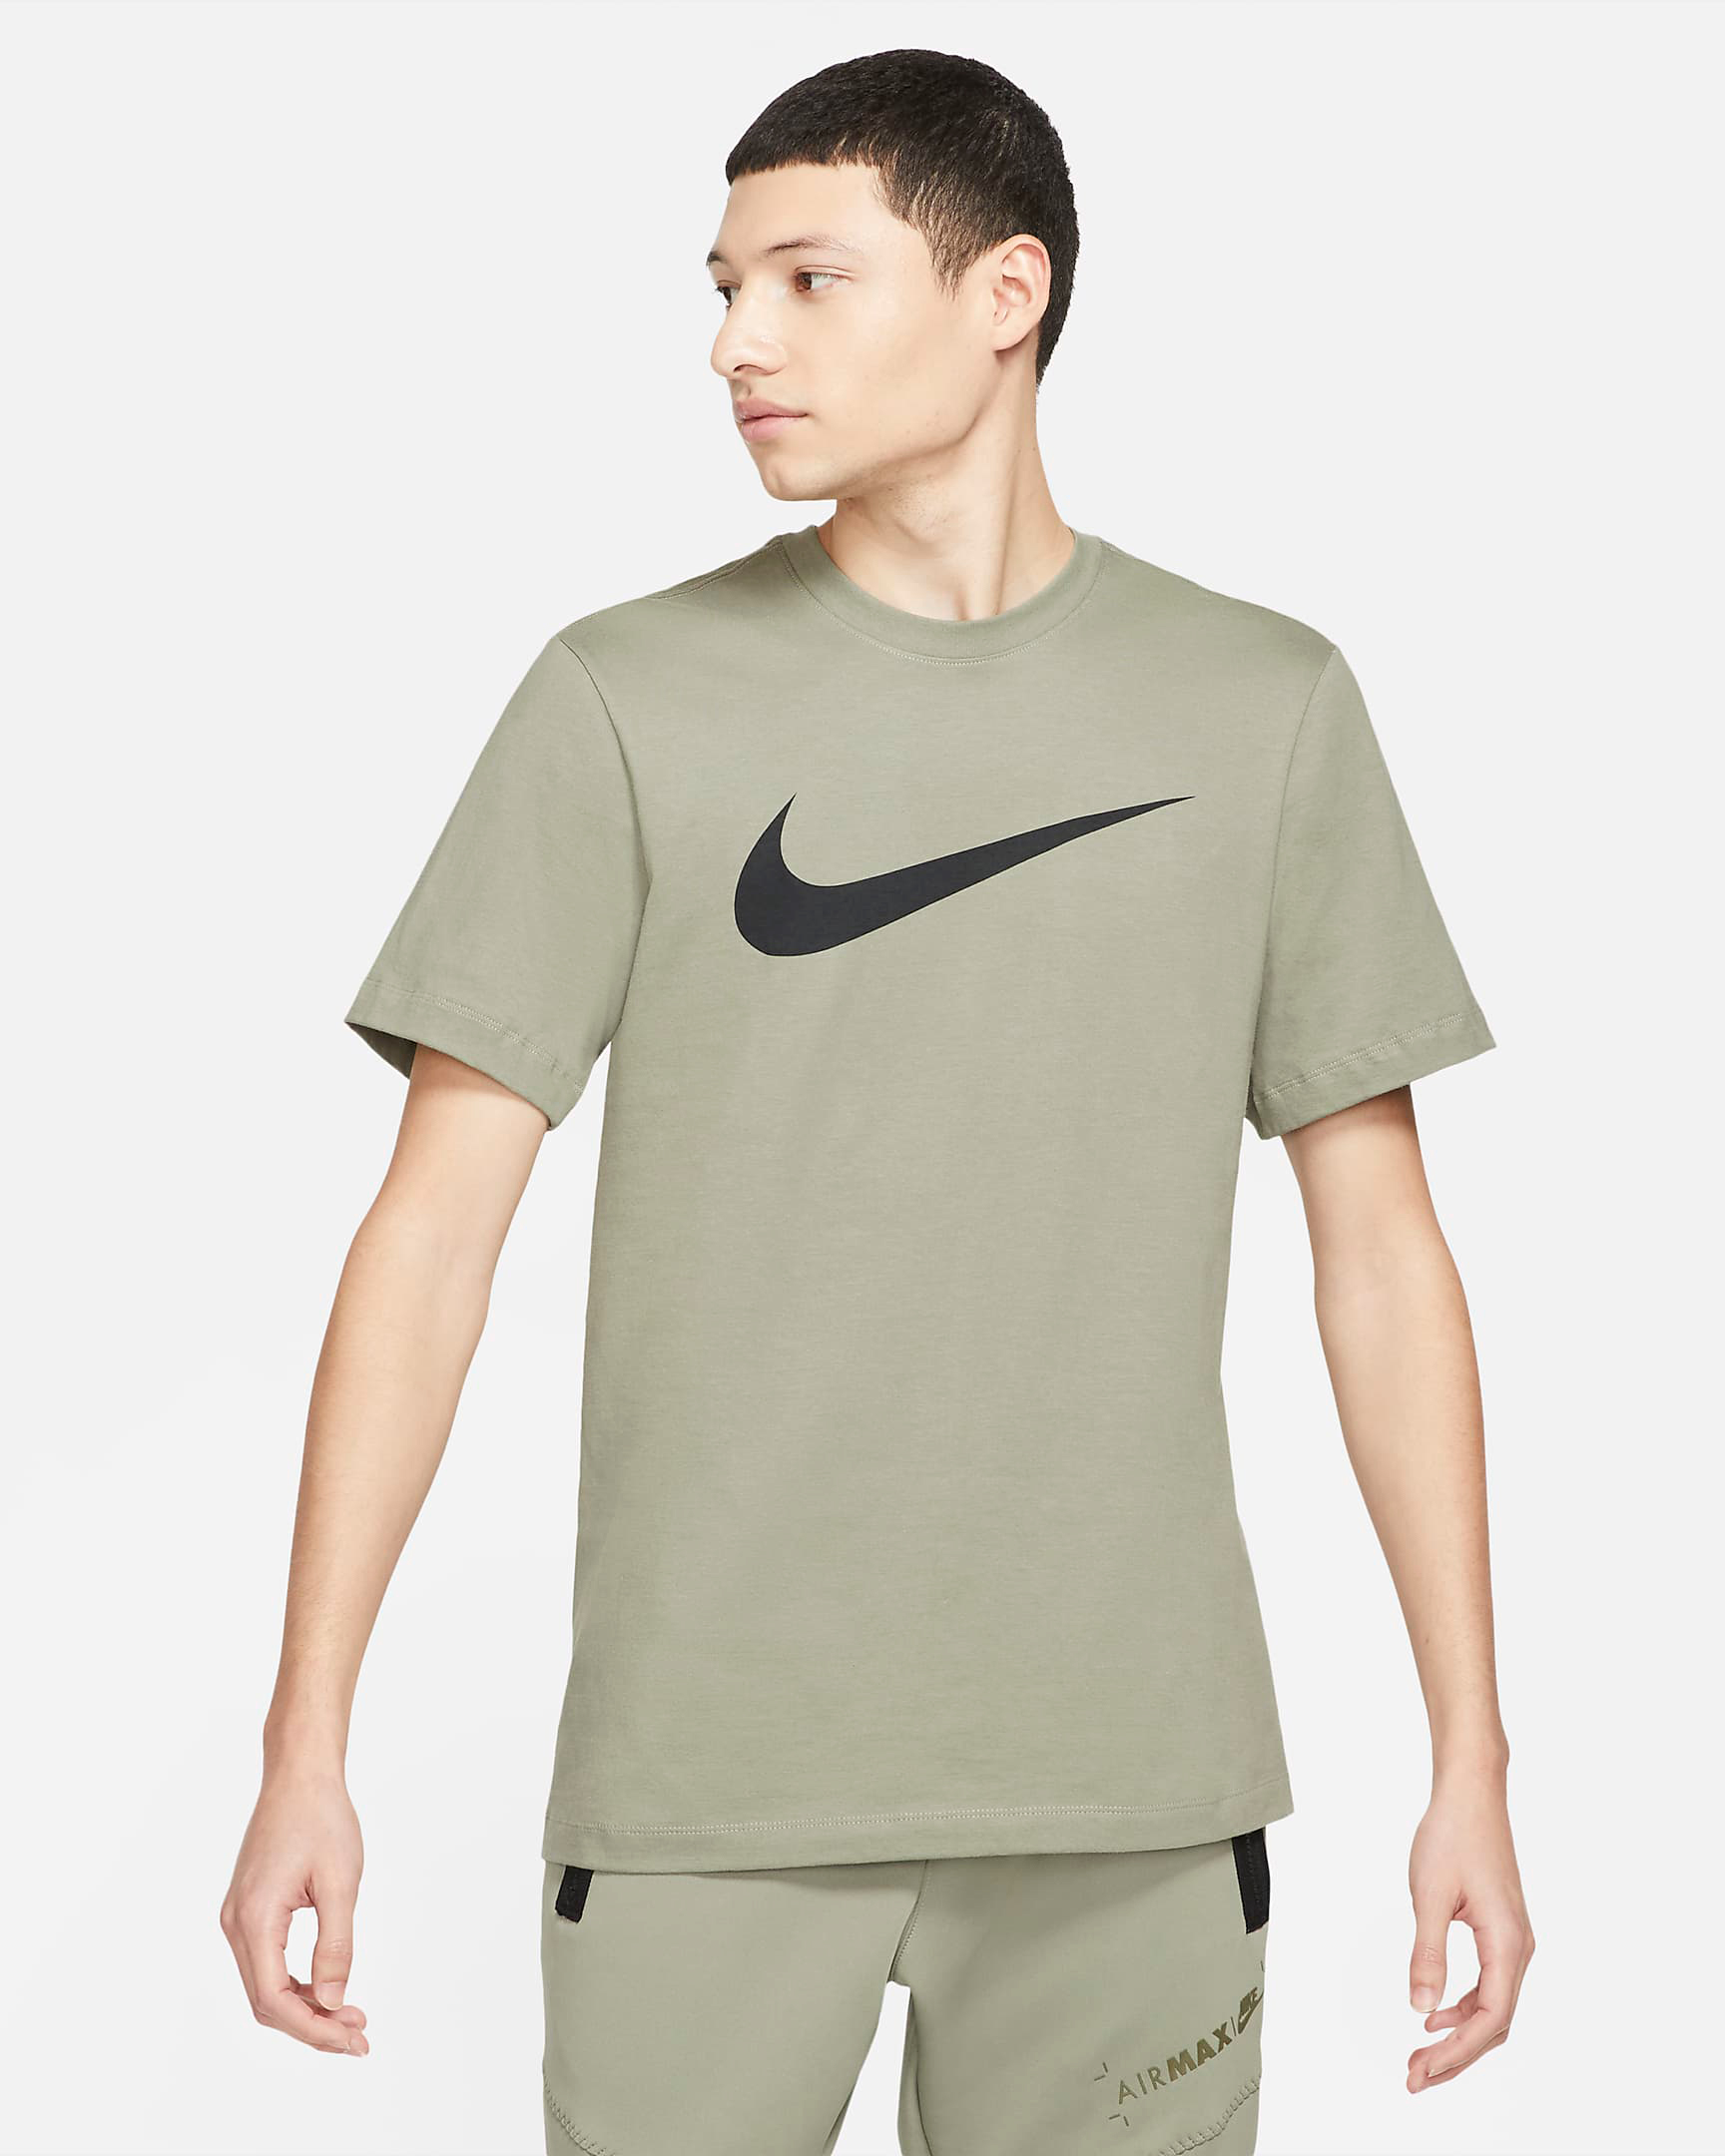 nike-light-army-shirt